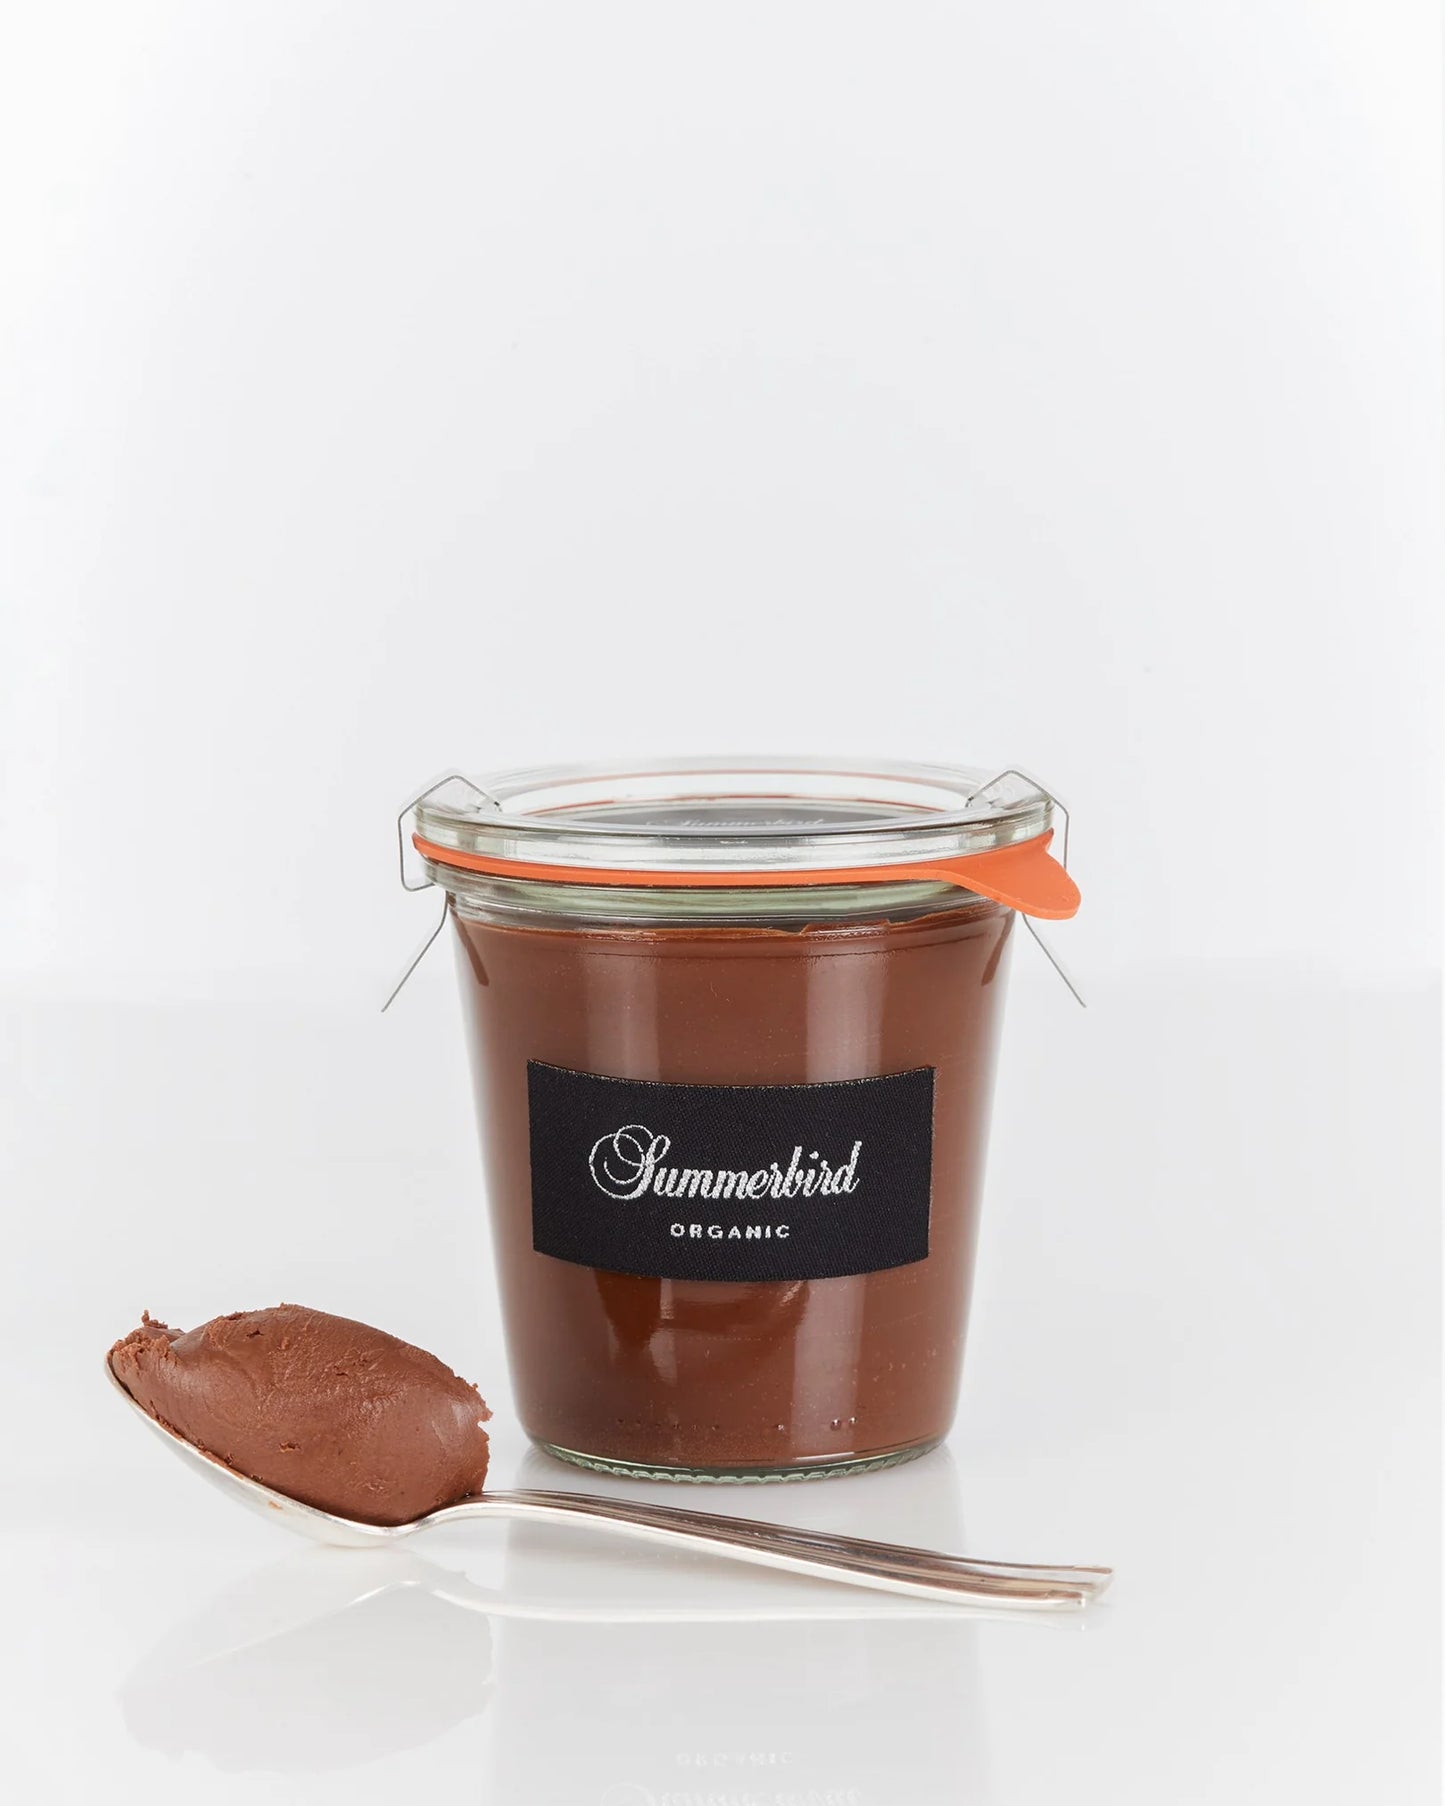 Summerbird - Chocolate Spread